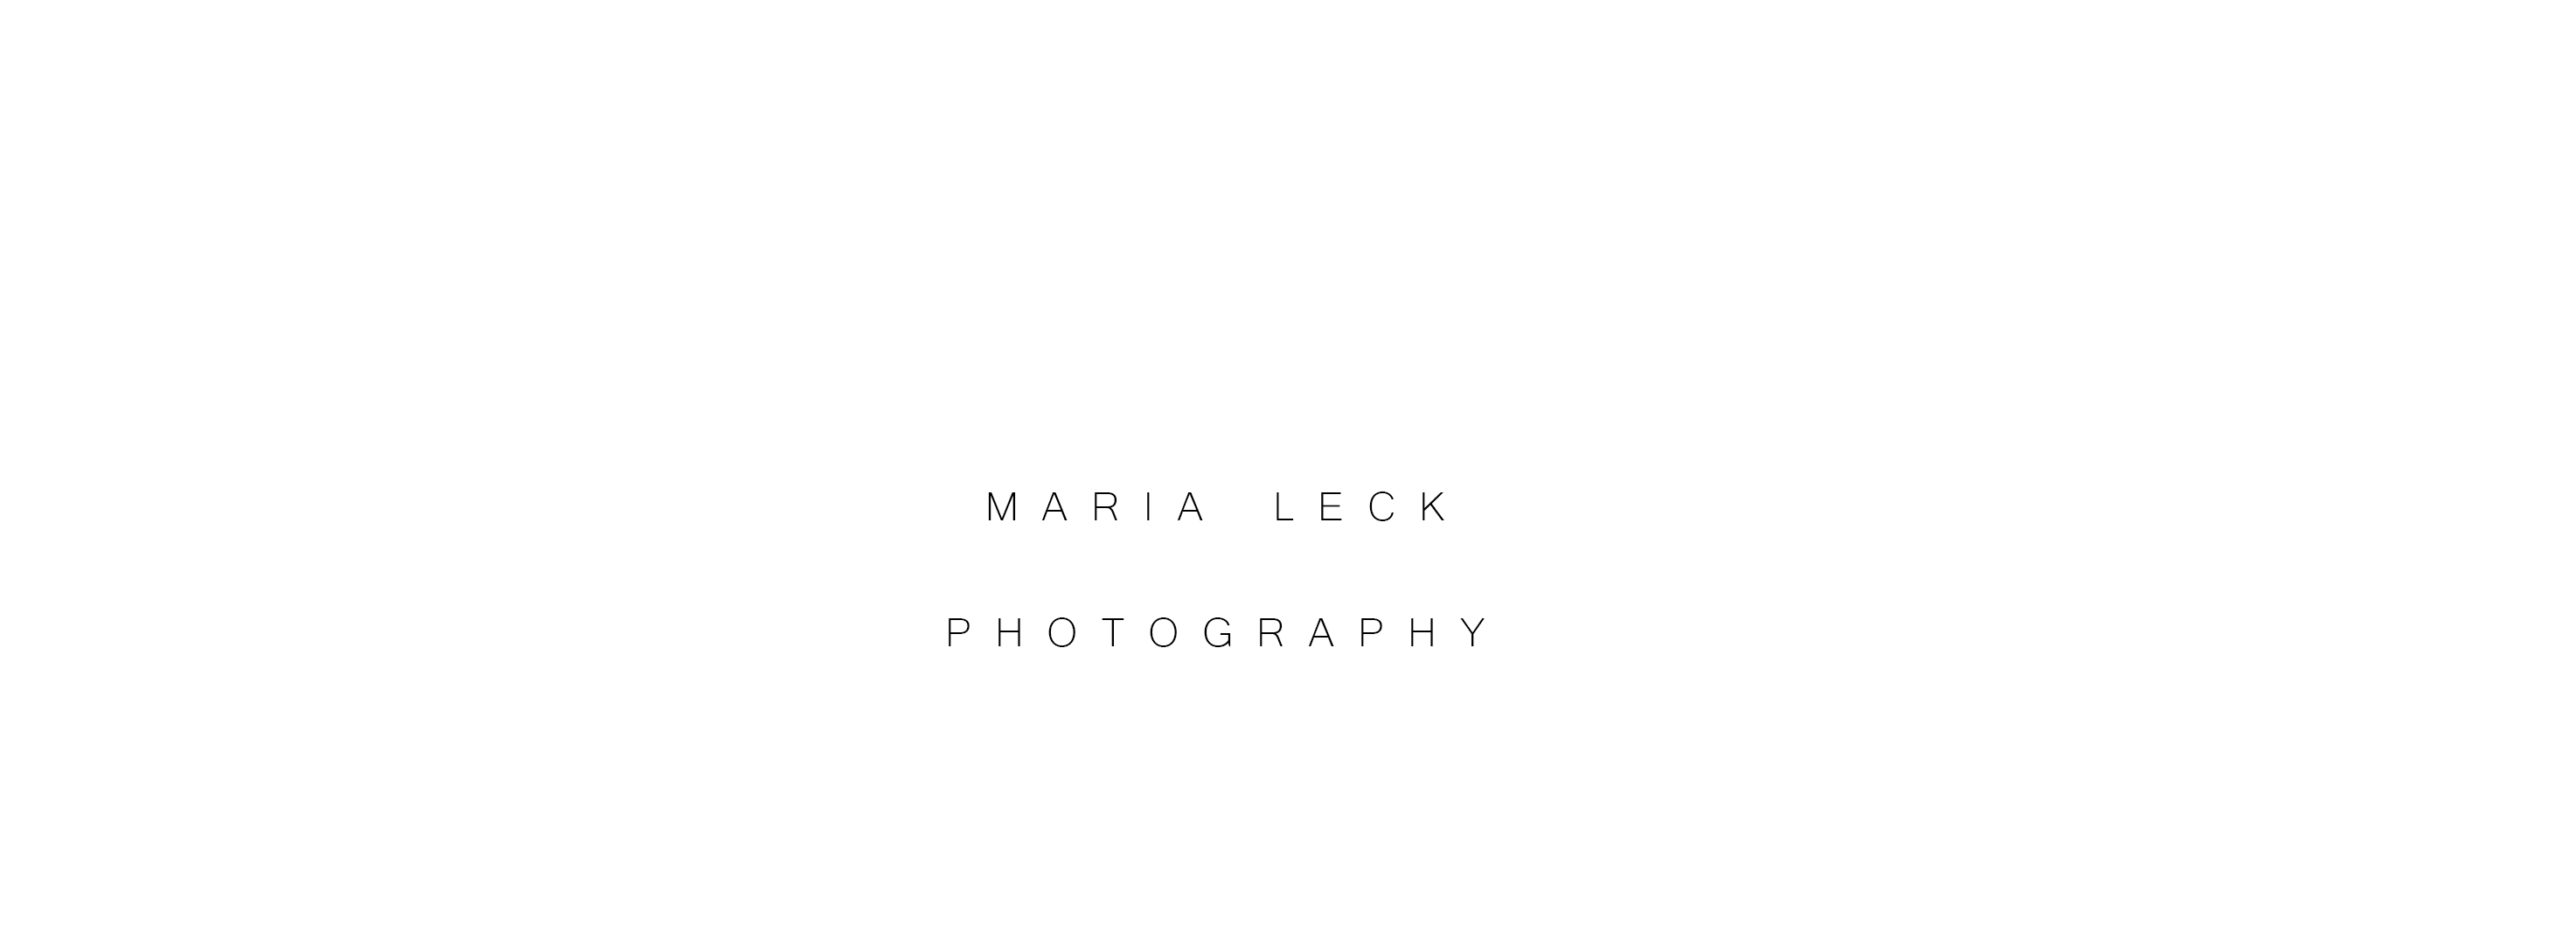 MARIA LECK